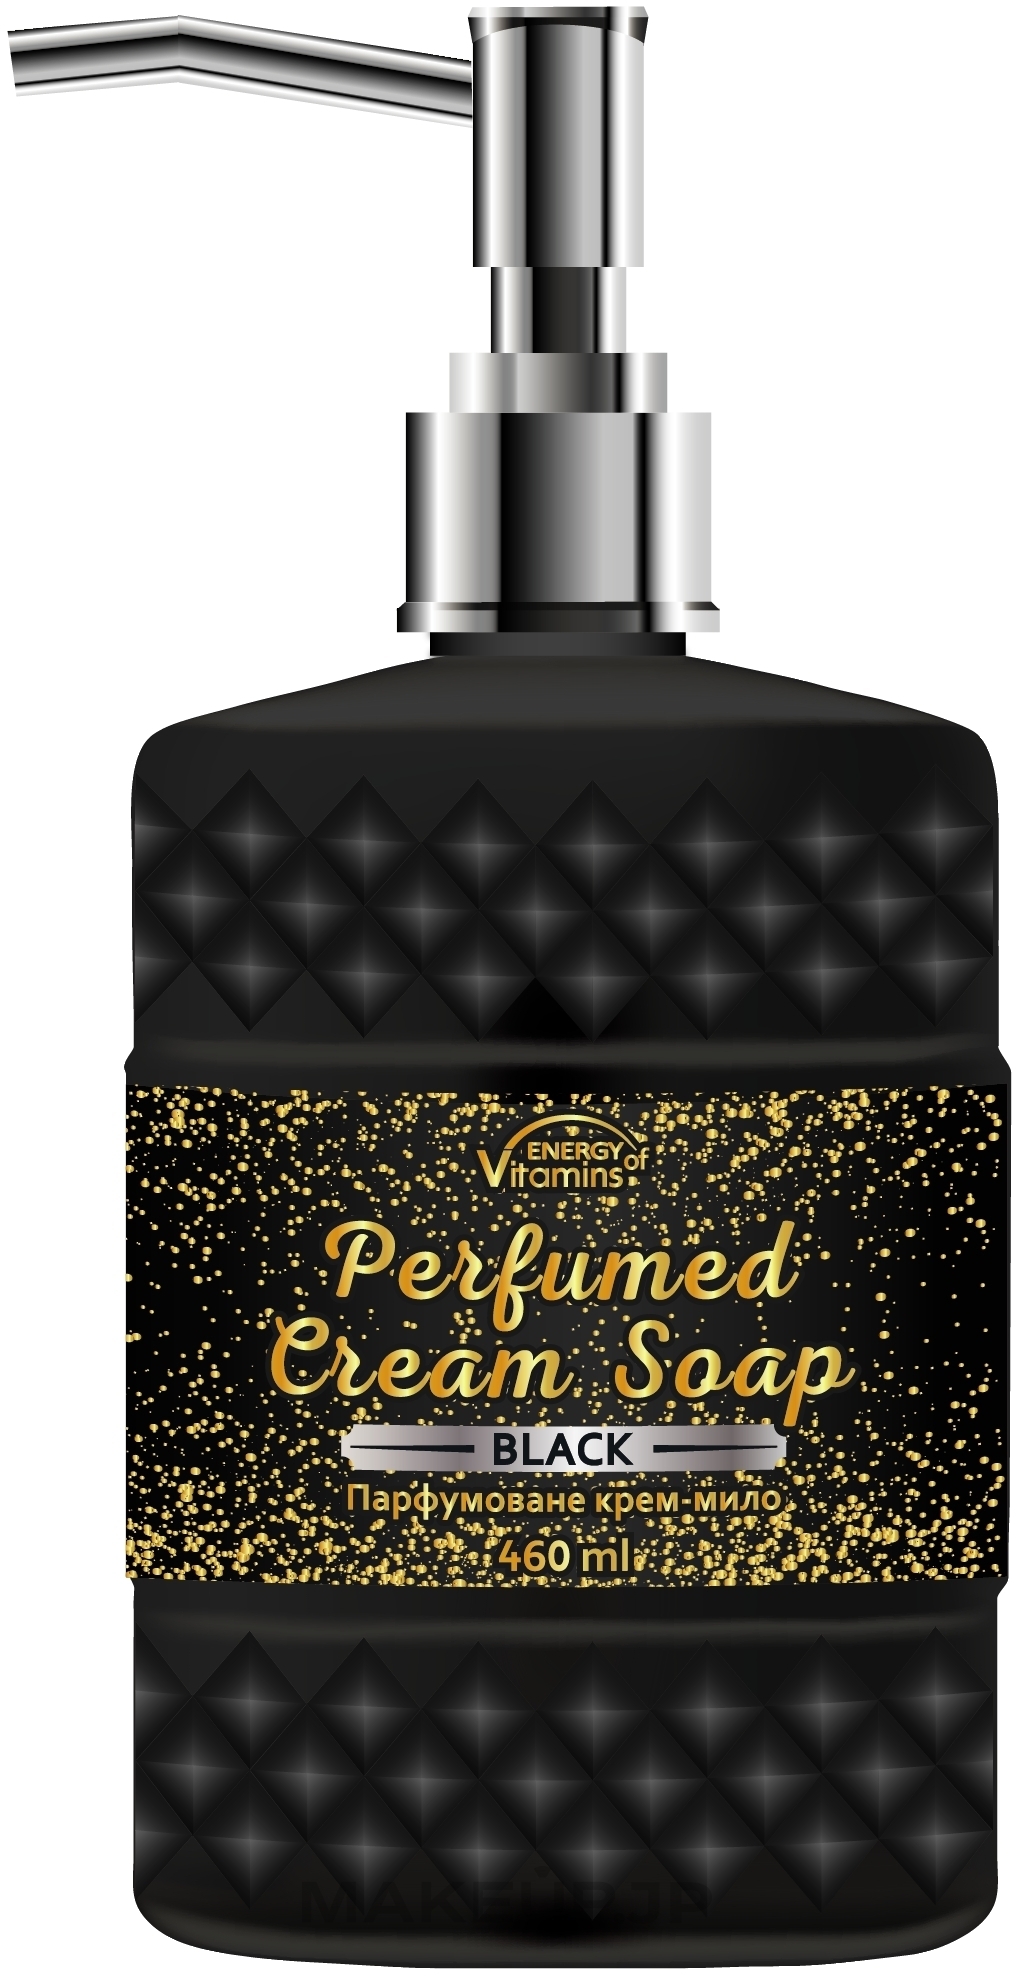 Black Body Cream Soap - Energy of Vitamins Perfumed Cream Soap — photo 460 ml